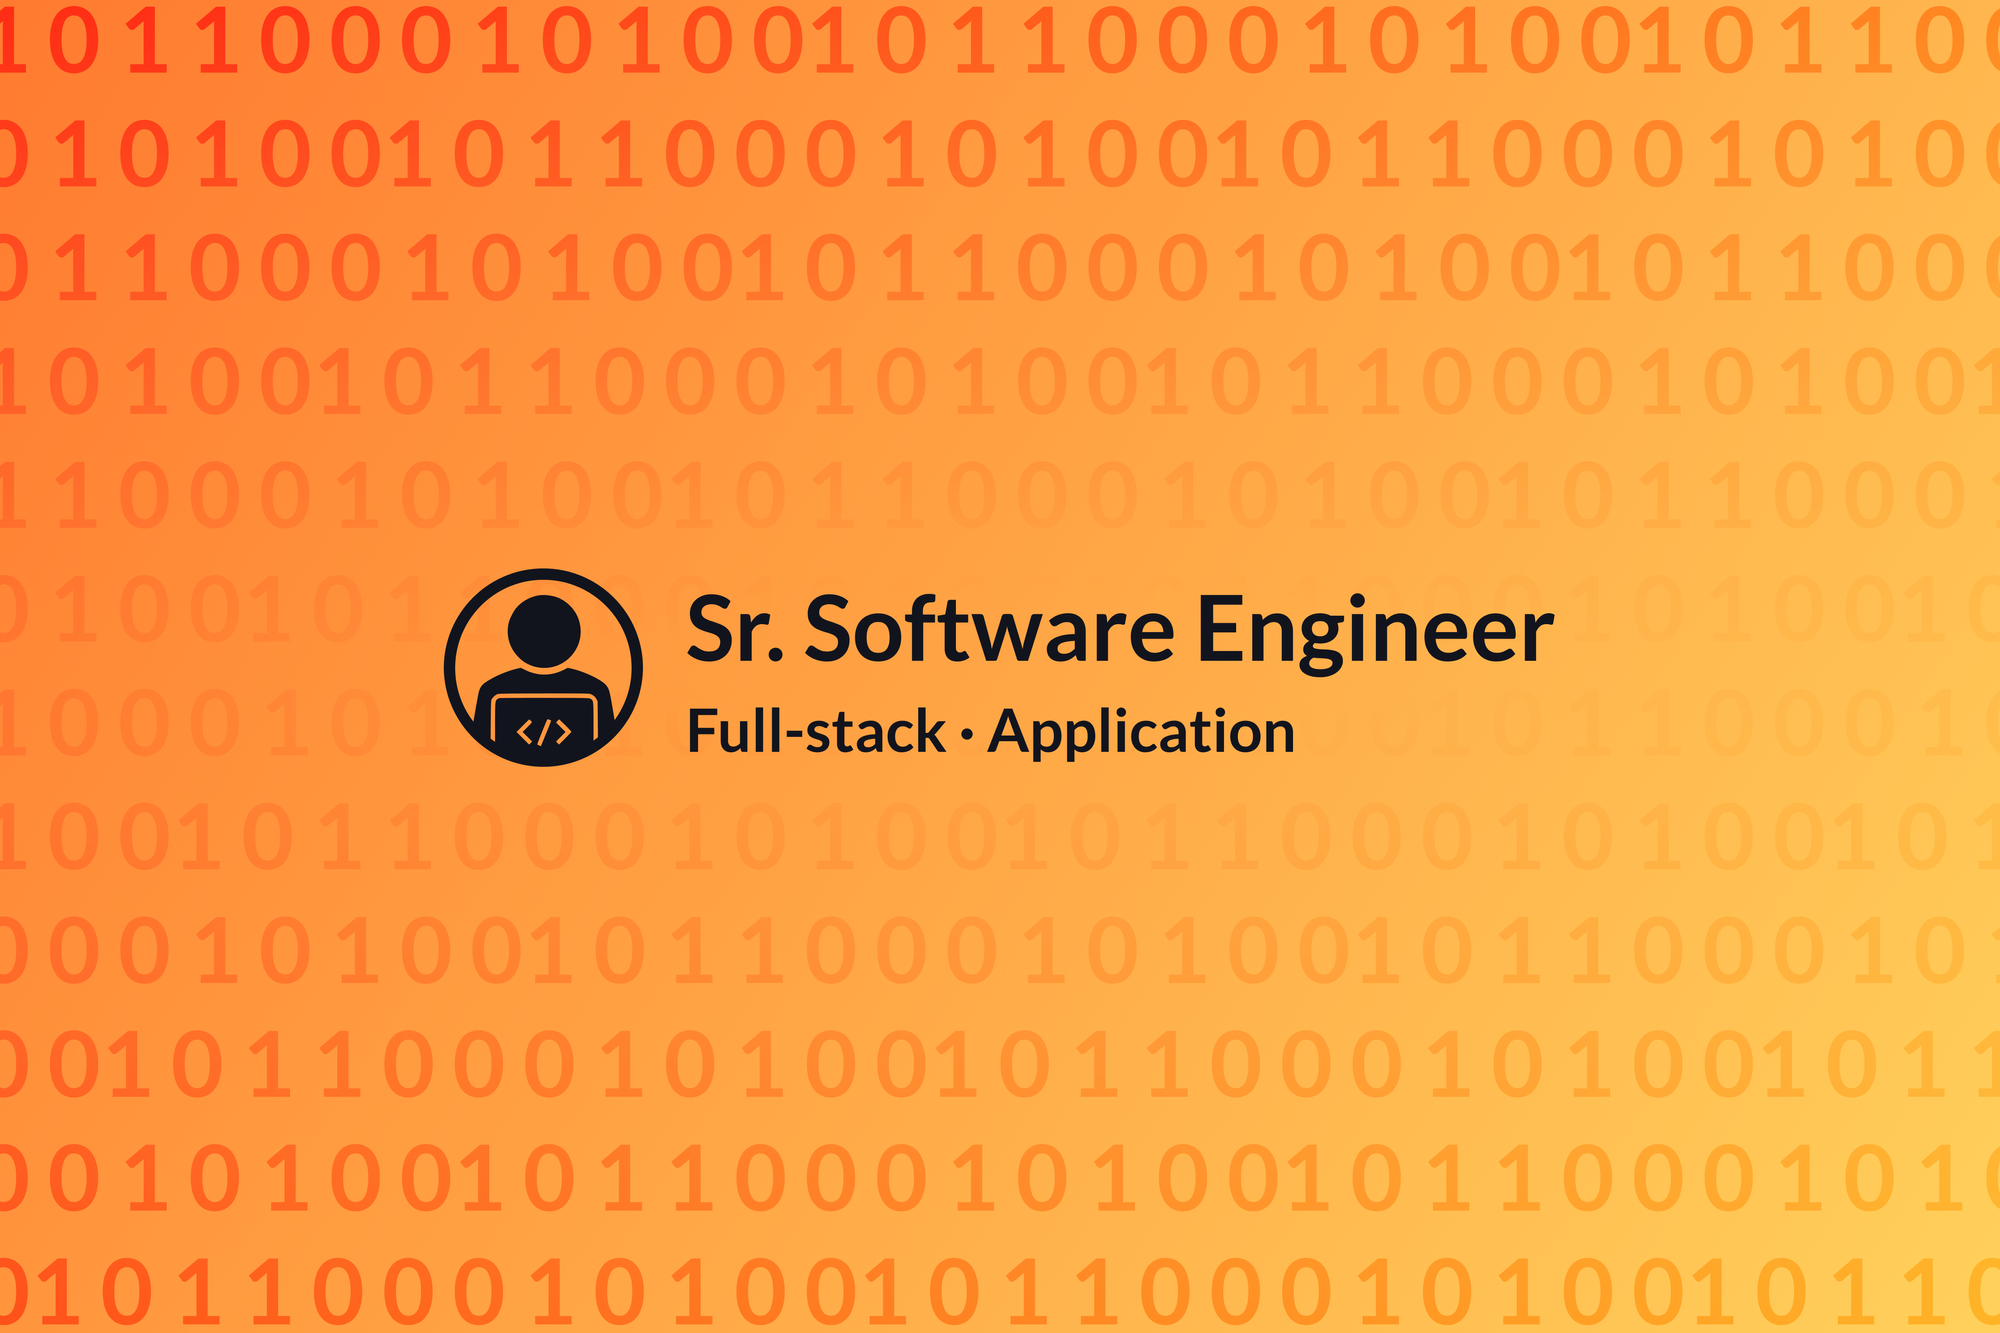 Senior Software Engineer, Full-stack (Application)